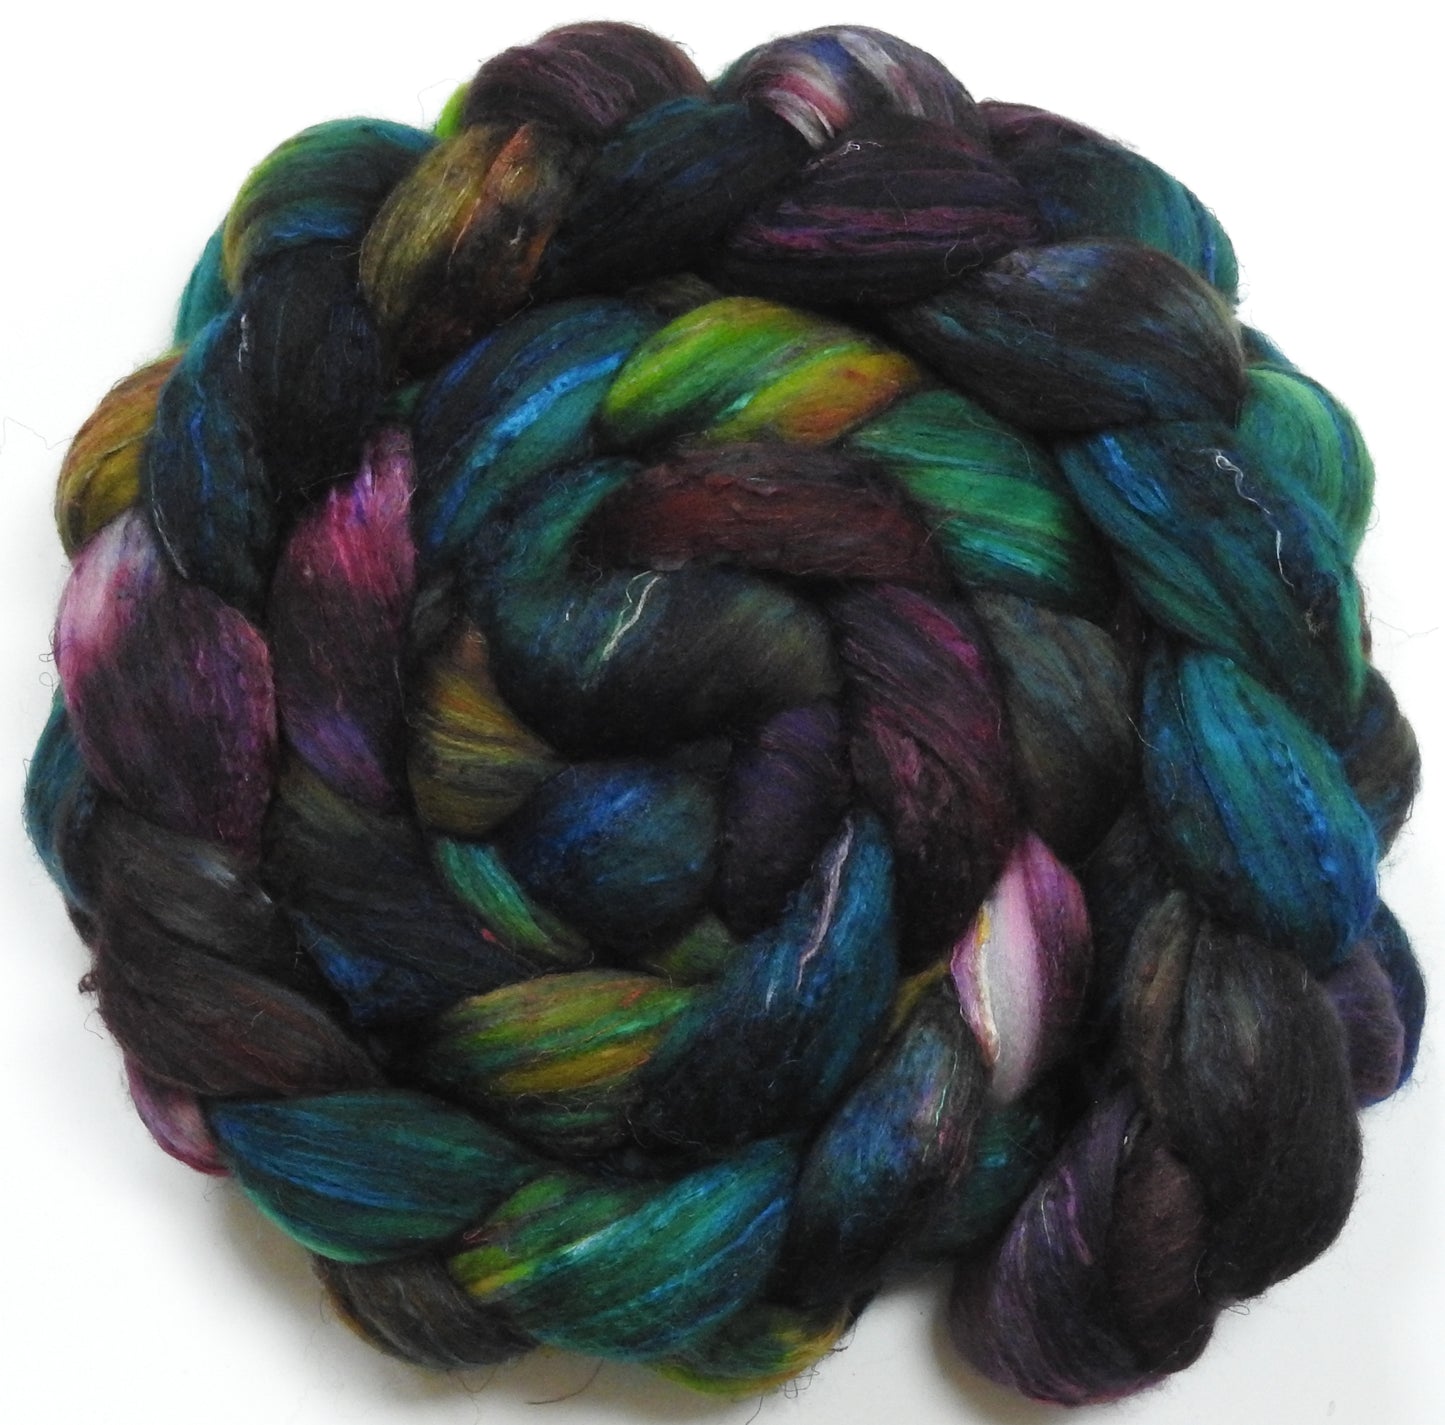 Bagpipe (5.7 oz) - Batt in a Braid #39  - Falkland Merino/ Mulberry Silk / Sari Silk (50/25/25)